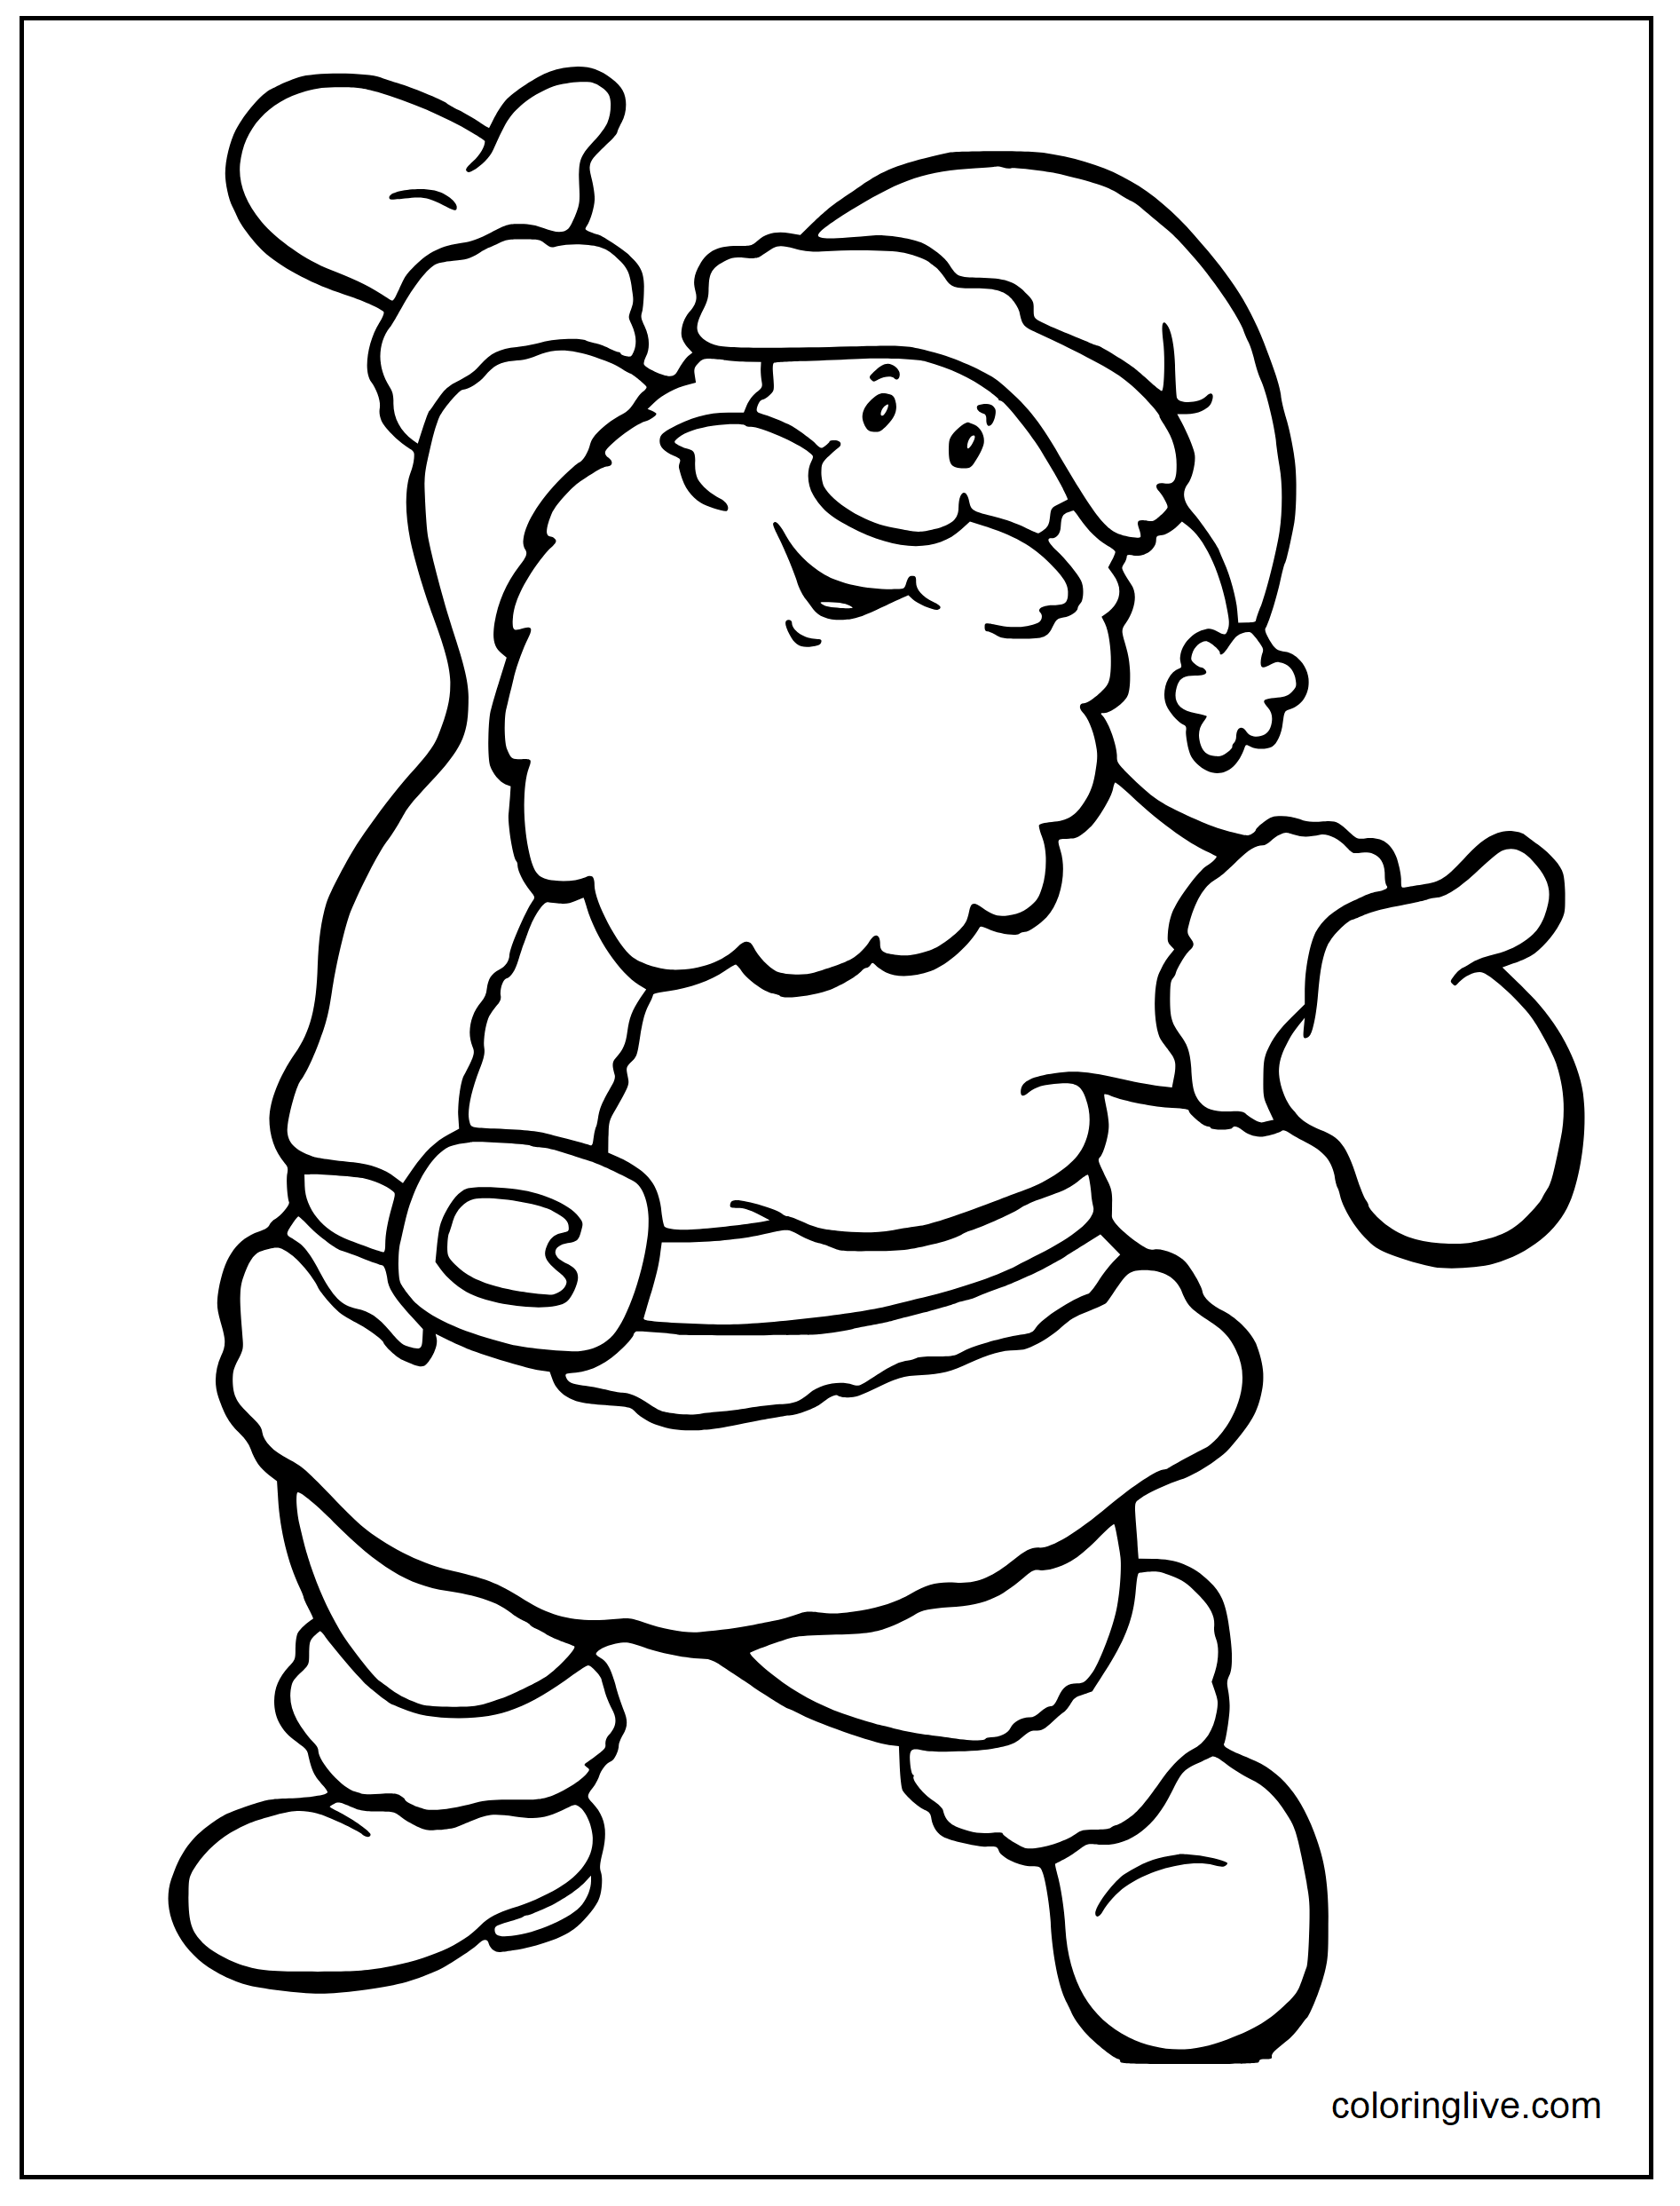 Printable Happy santa  sheet Coloring Page for kids.